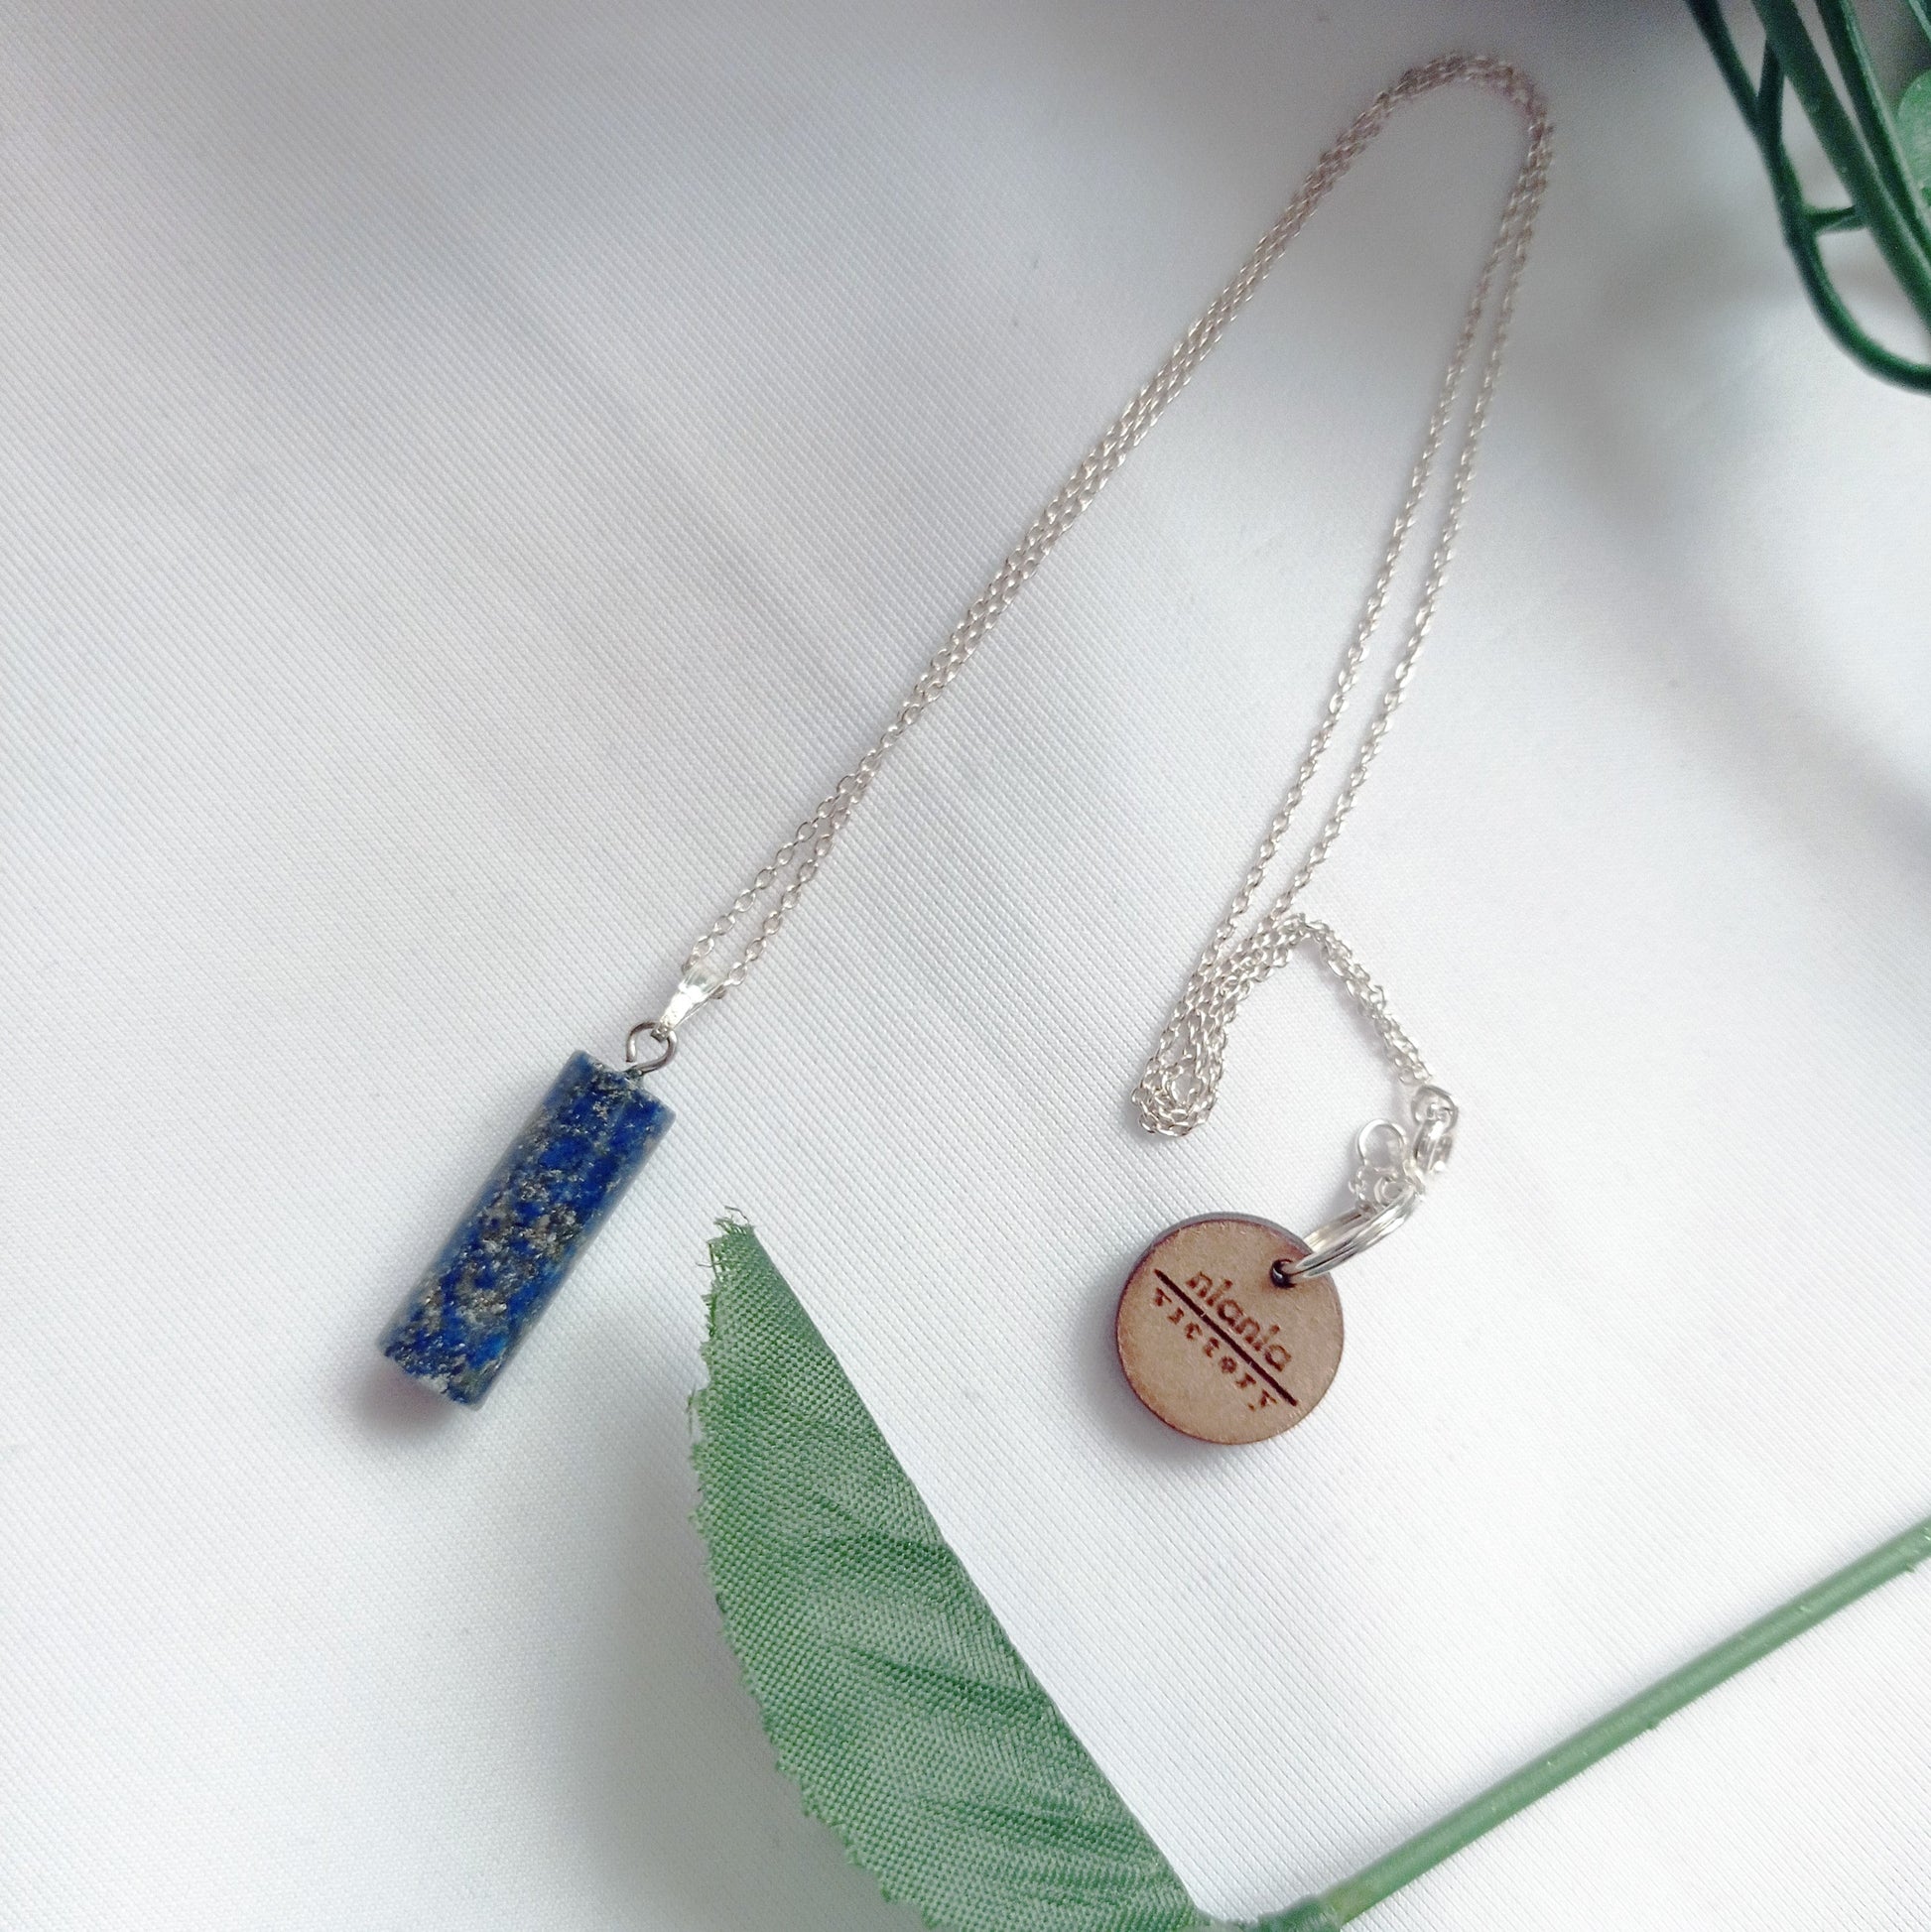 Lapis Lazuli Necklace, Lapis Lazuli Pendant, Sterling Silver Necklace, Gemstone Pendant Necklace | by nlanlaVictory-4